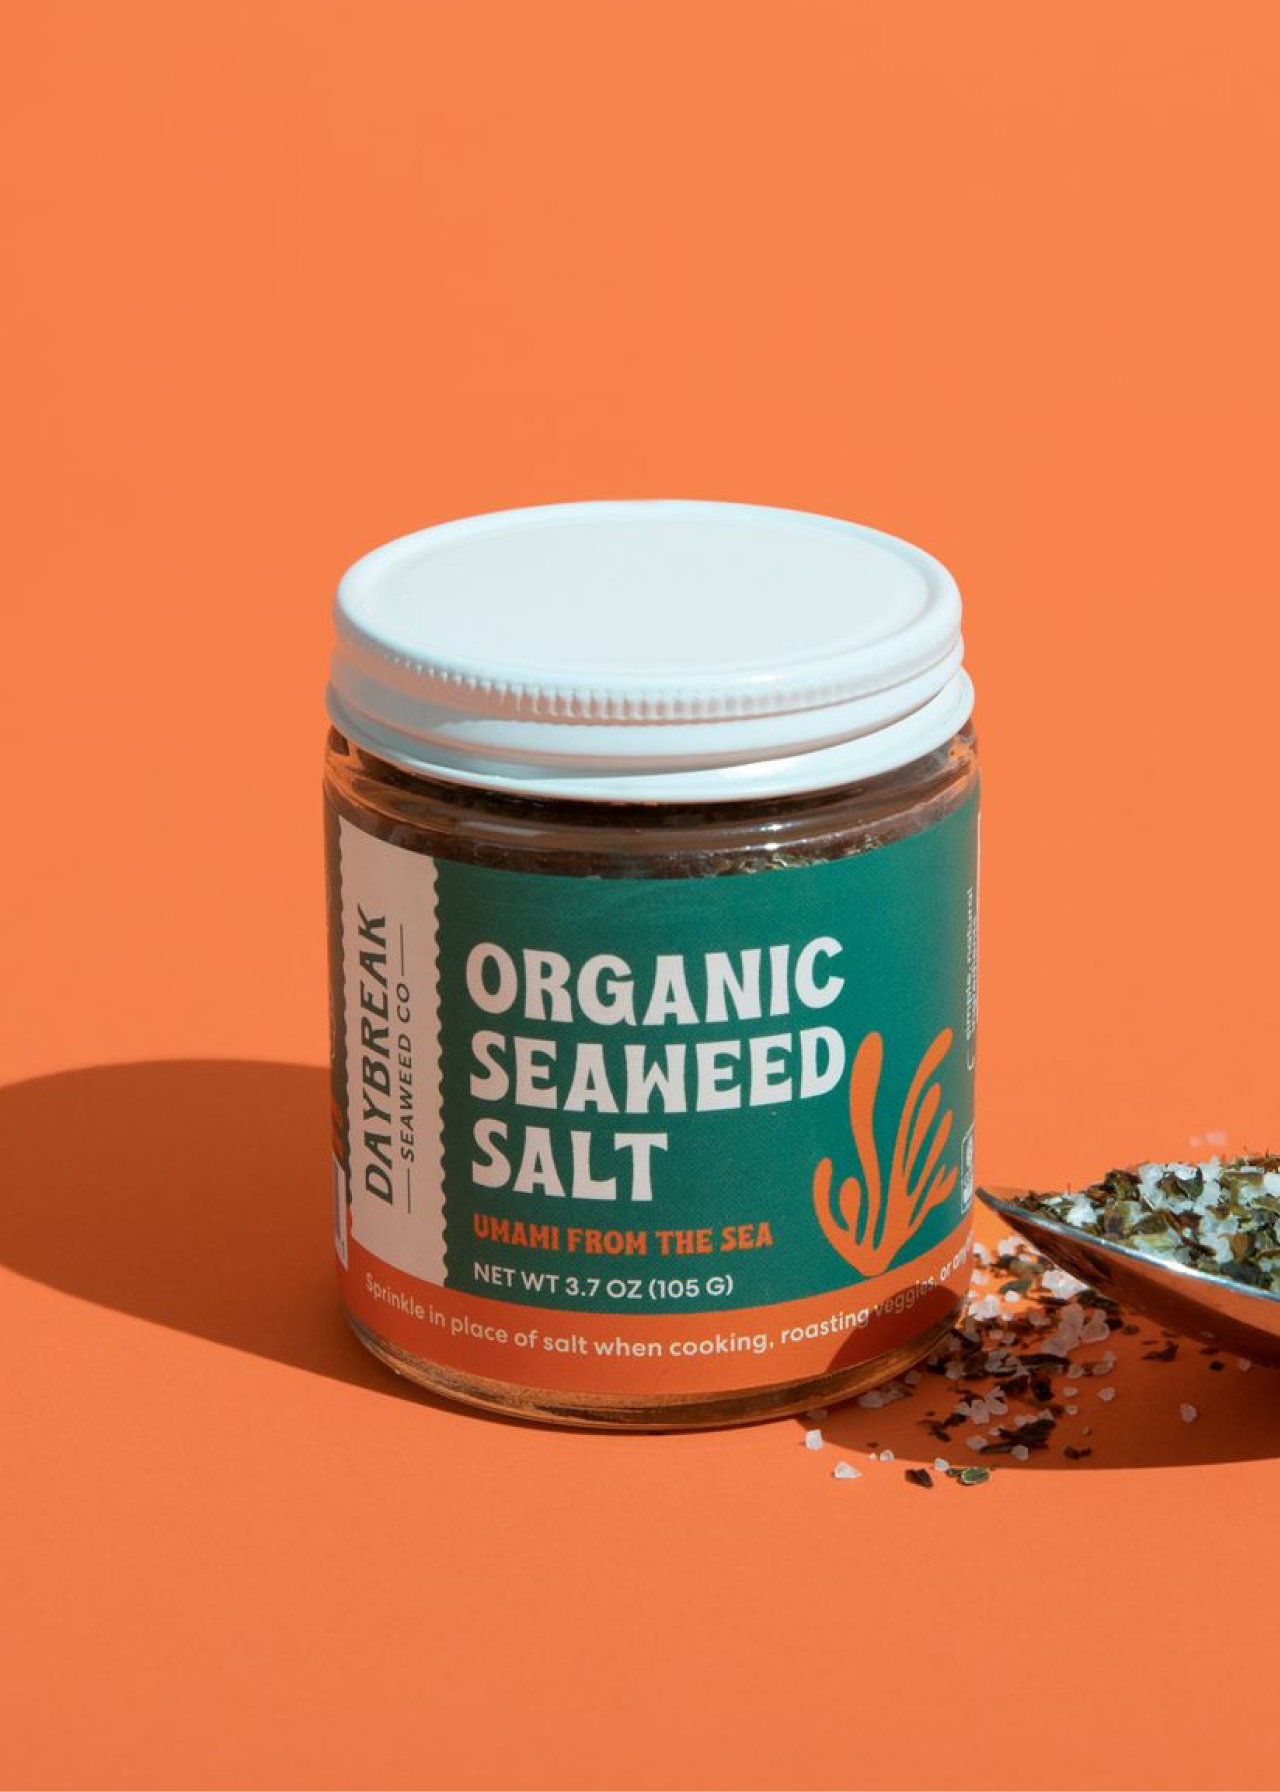 Organic-seaweed-packaging-design.png